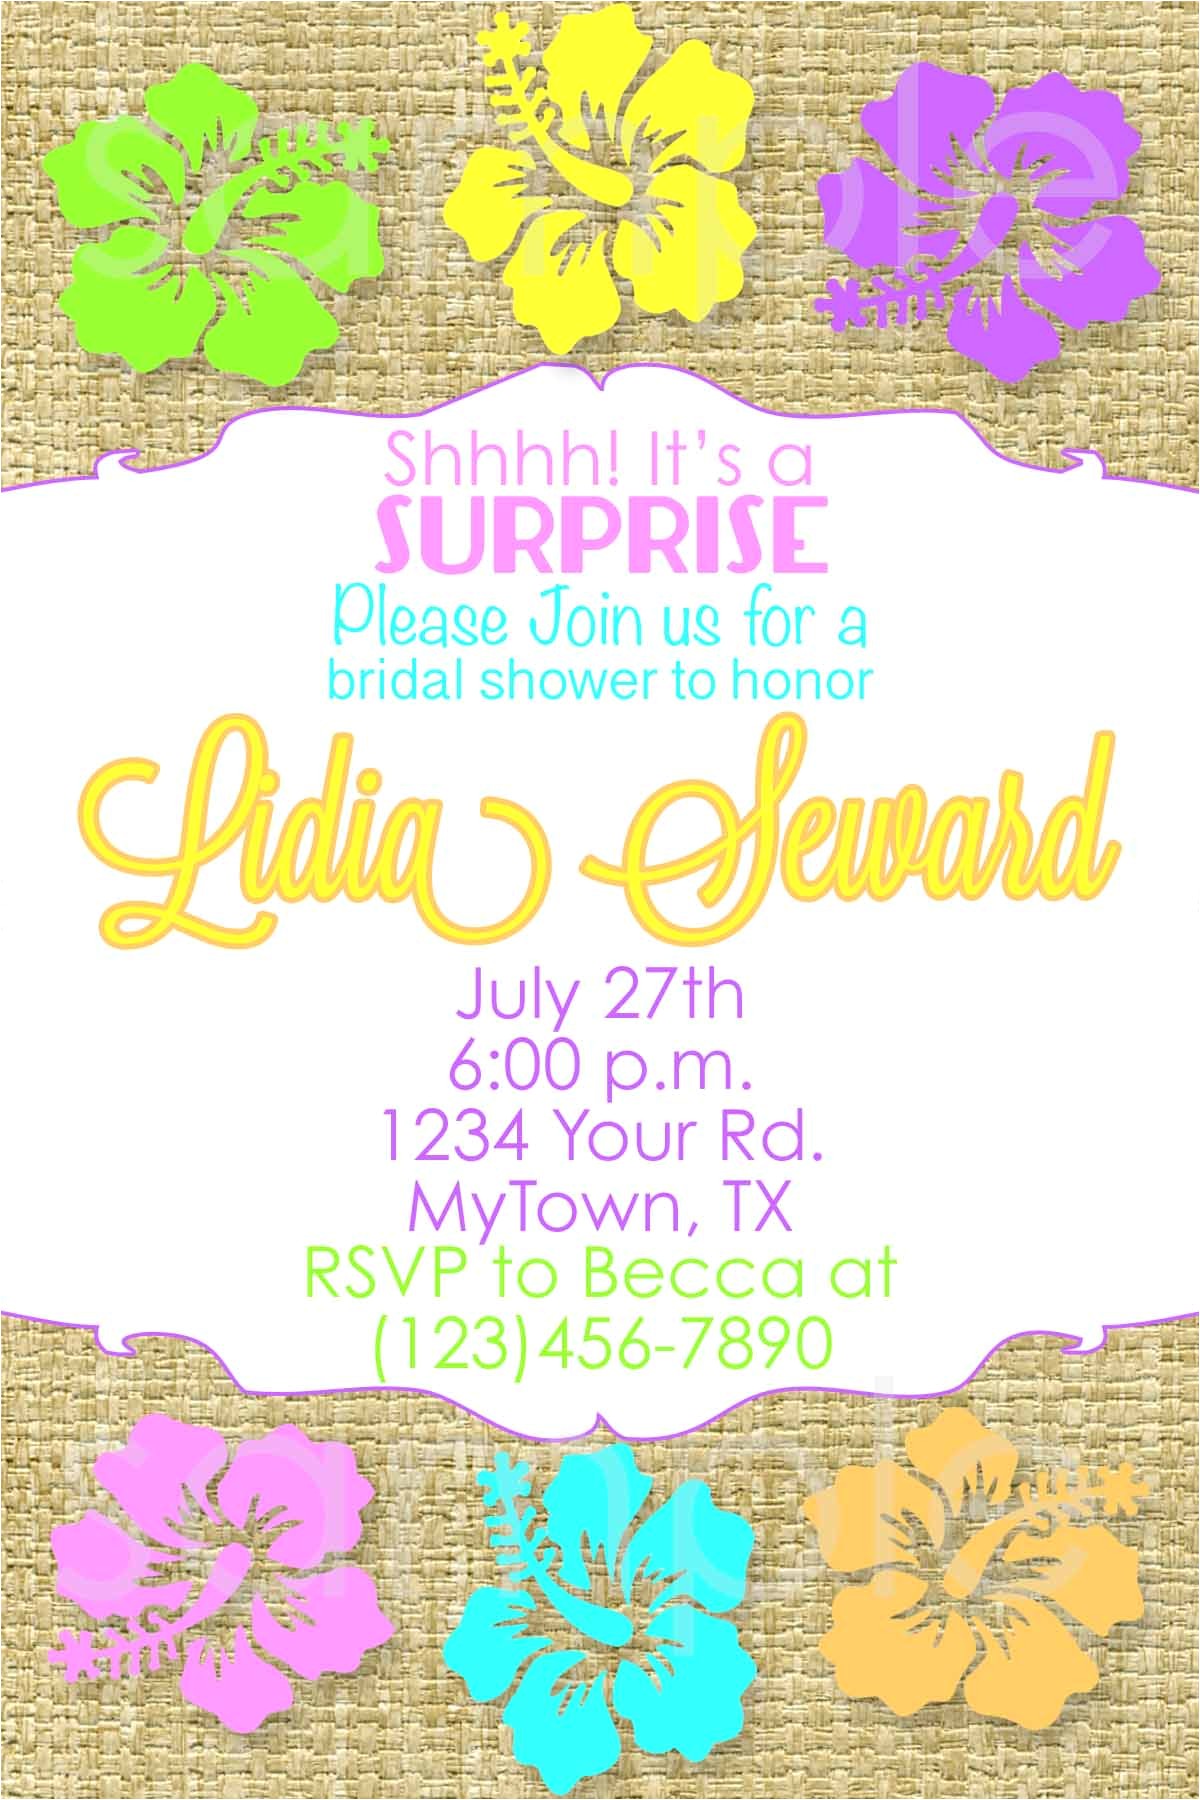 free hawaiian bridal shower invitations